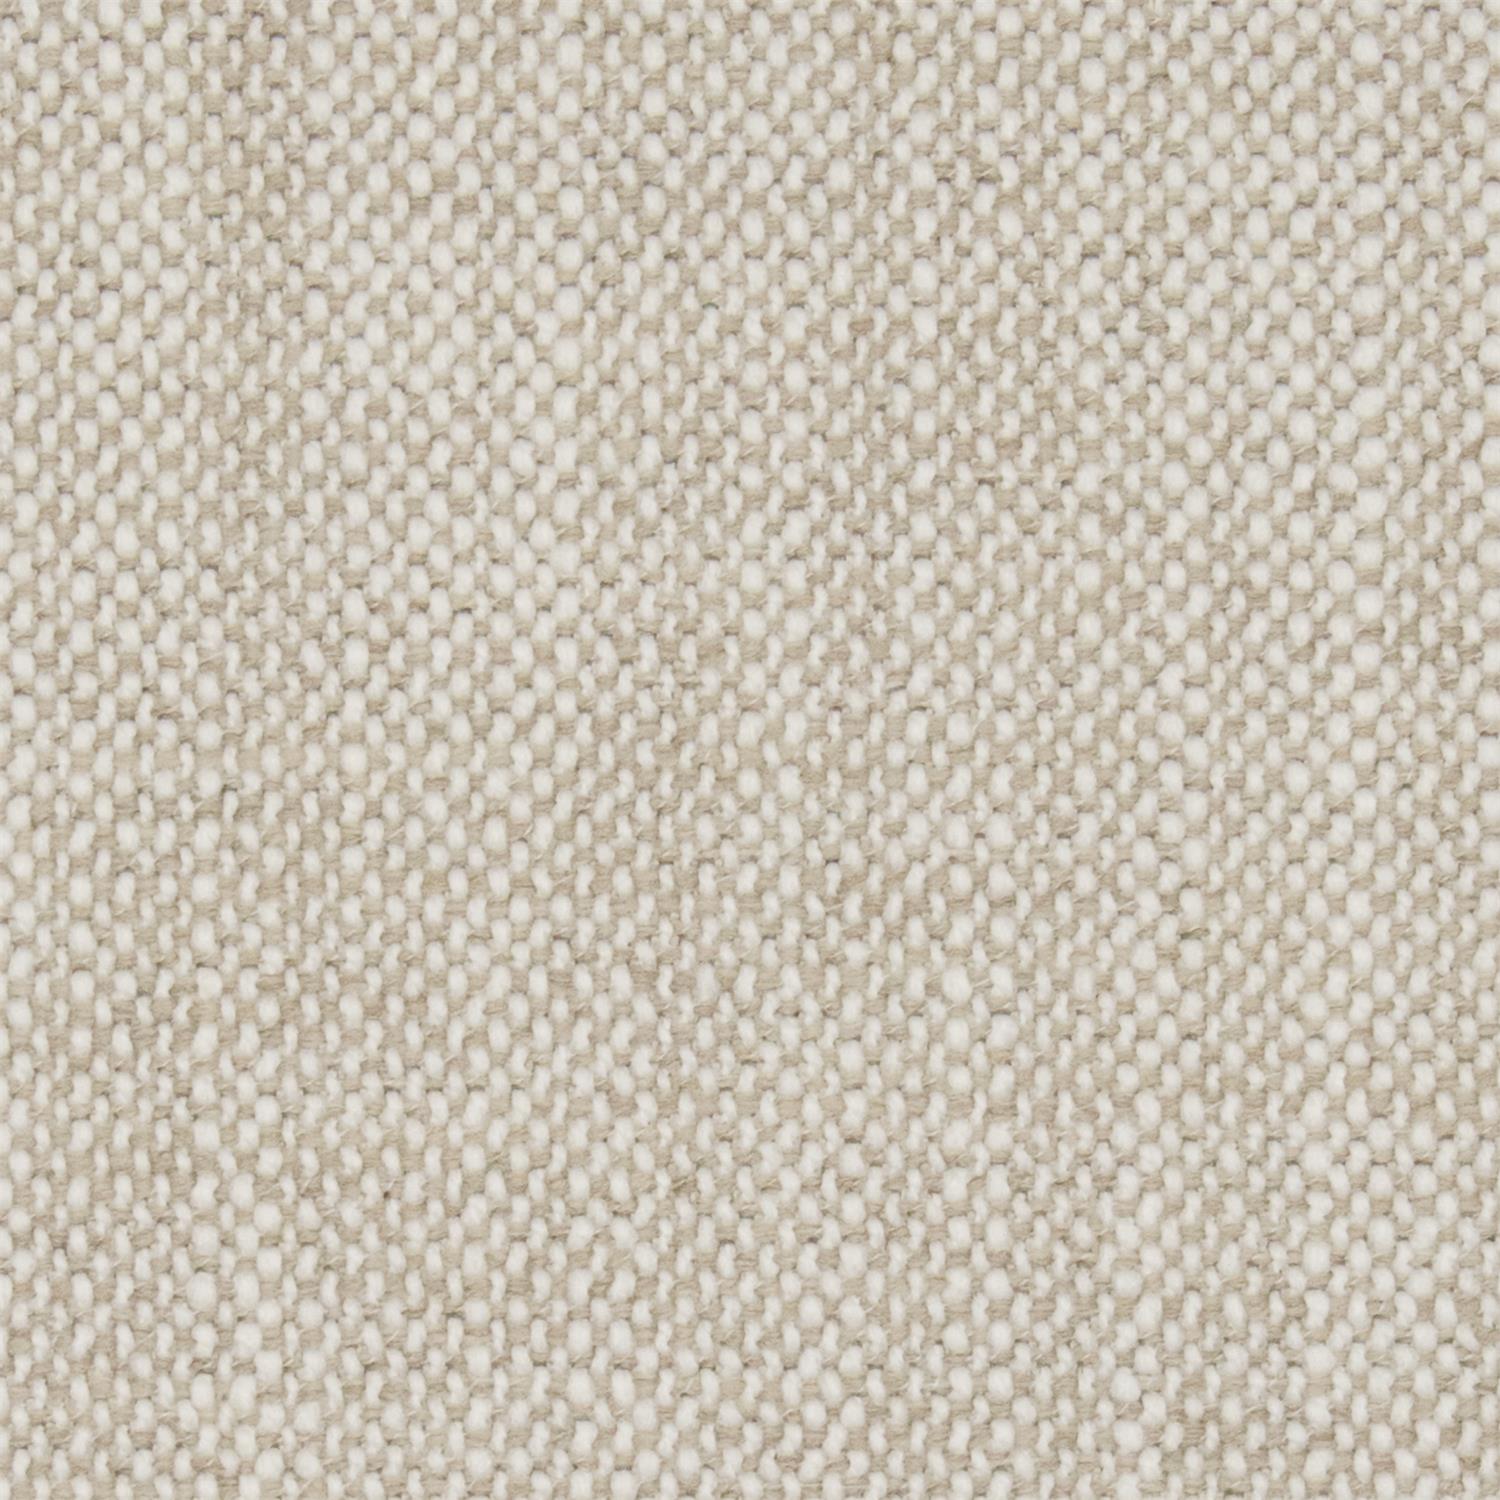 B066-020 Fabric